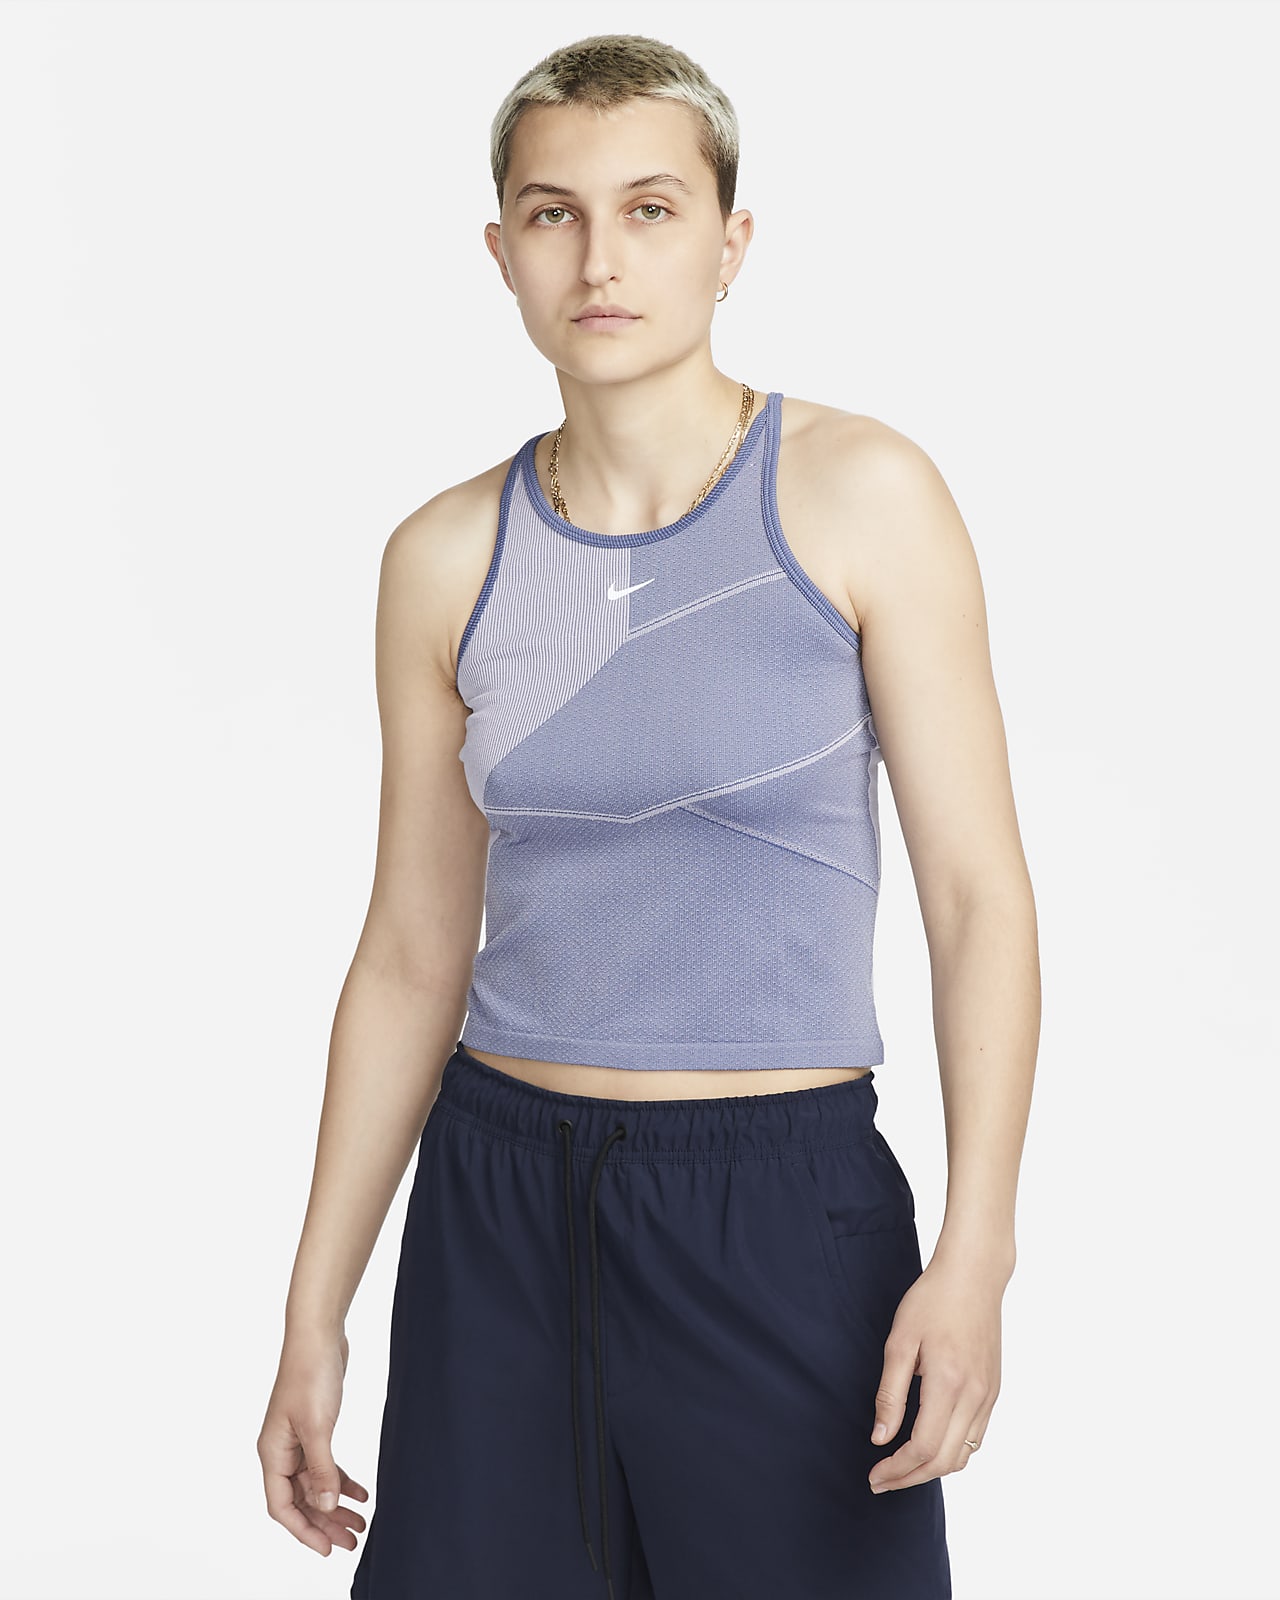 Nike ADV Aura Women's Slim-Fit Training Tank Top.